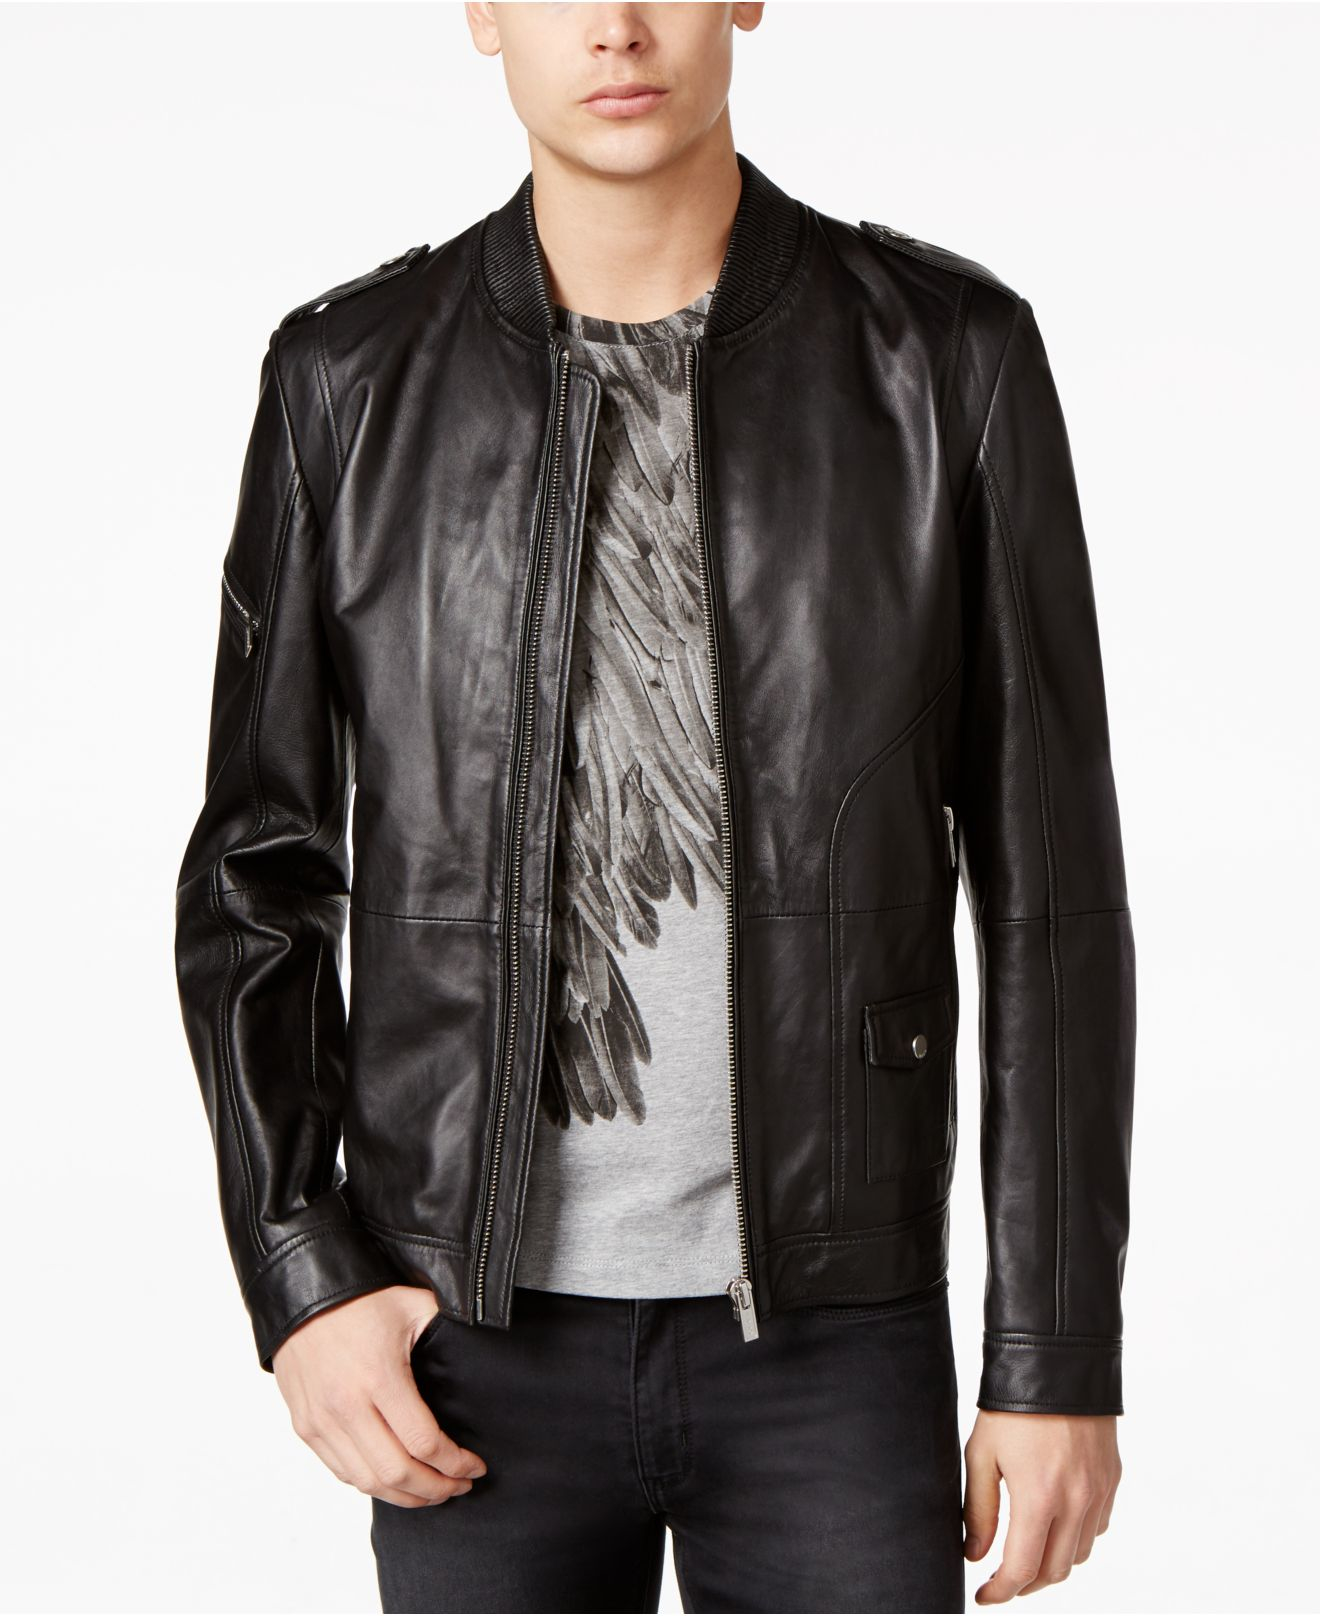 Hugo Boss Amg Leather Jacket Flash Sales, 58% OFF | ilikepinga.com